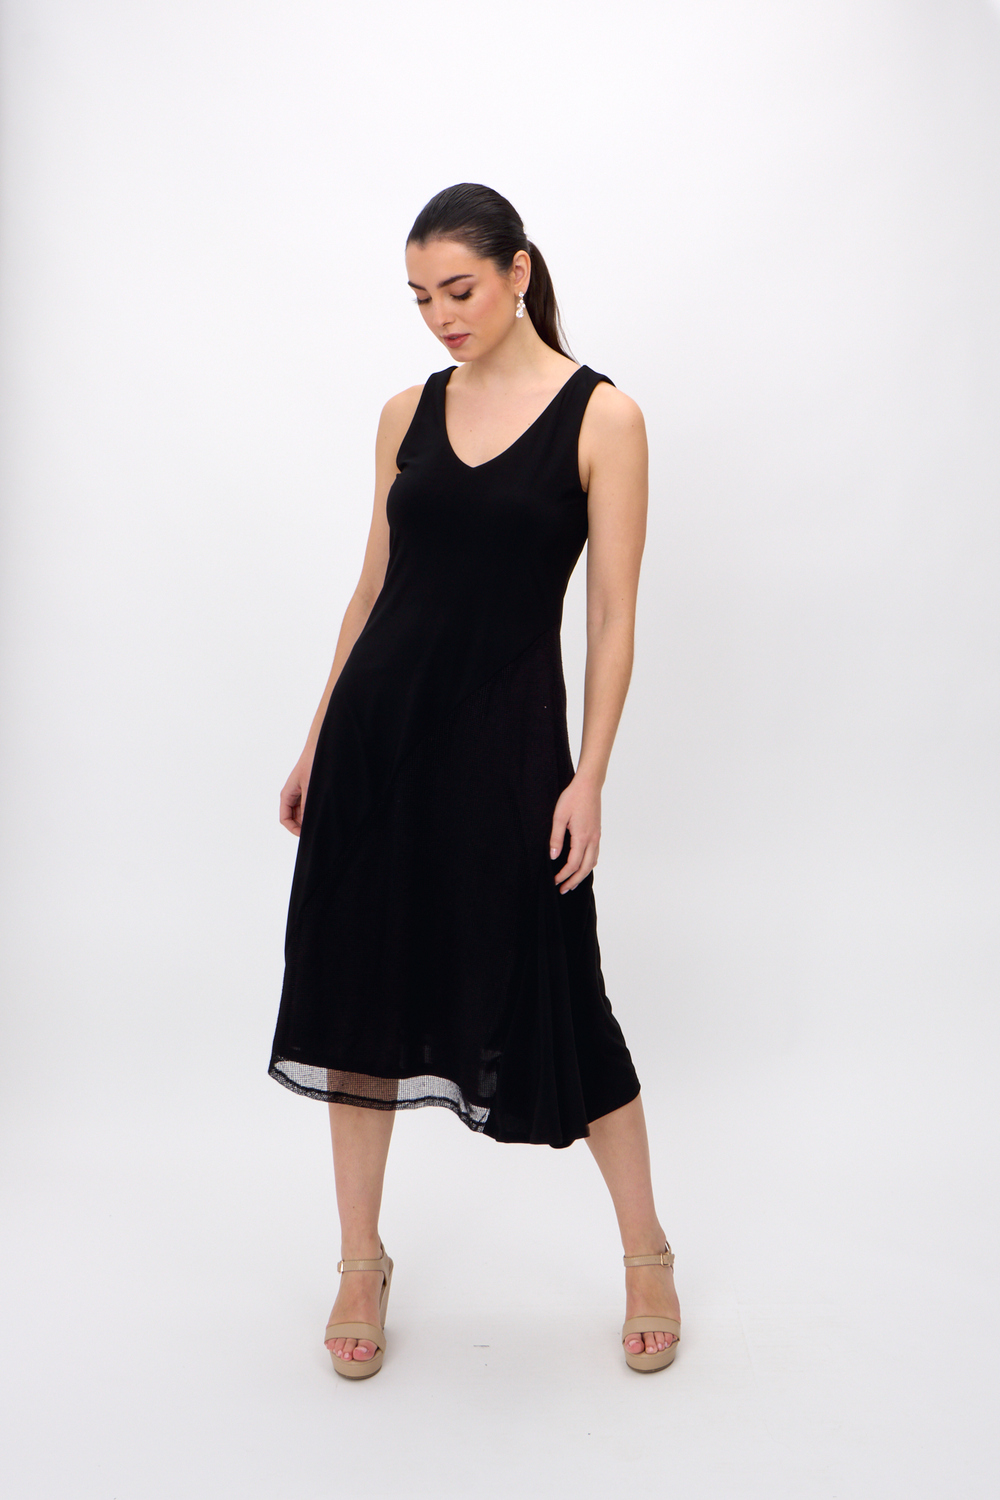 Sleeveless V-Neck Dress Style 242110. Black